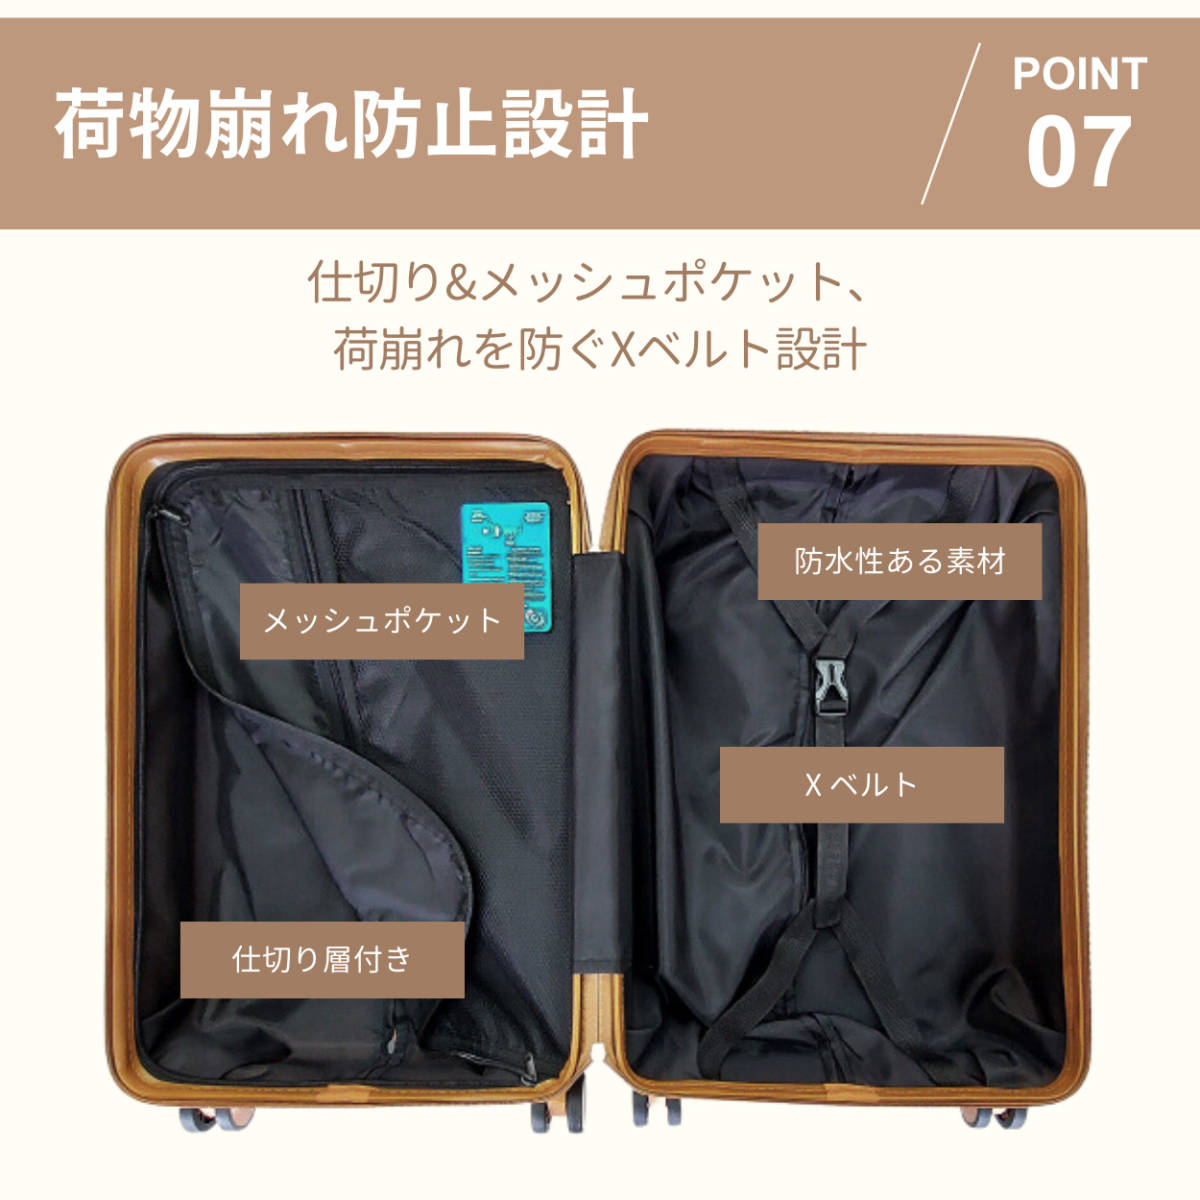 RIOU Carry case suitcase lady's S size single goods 